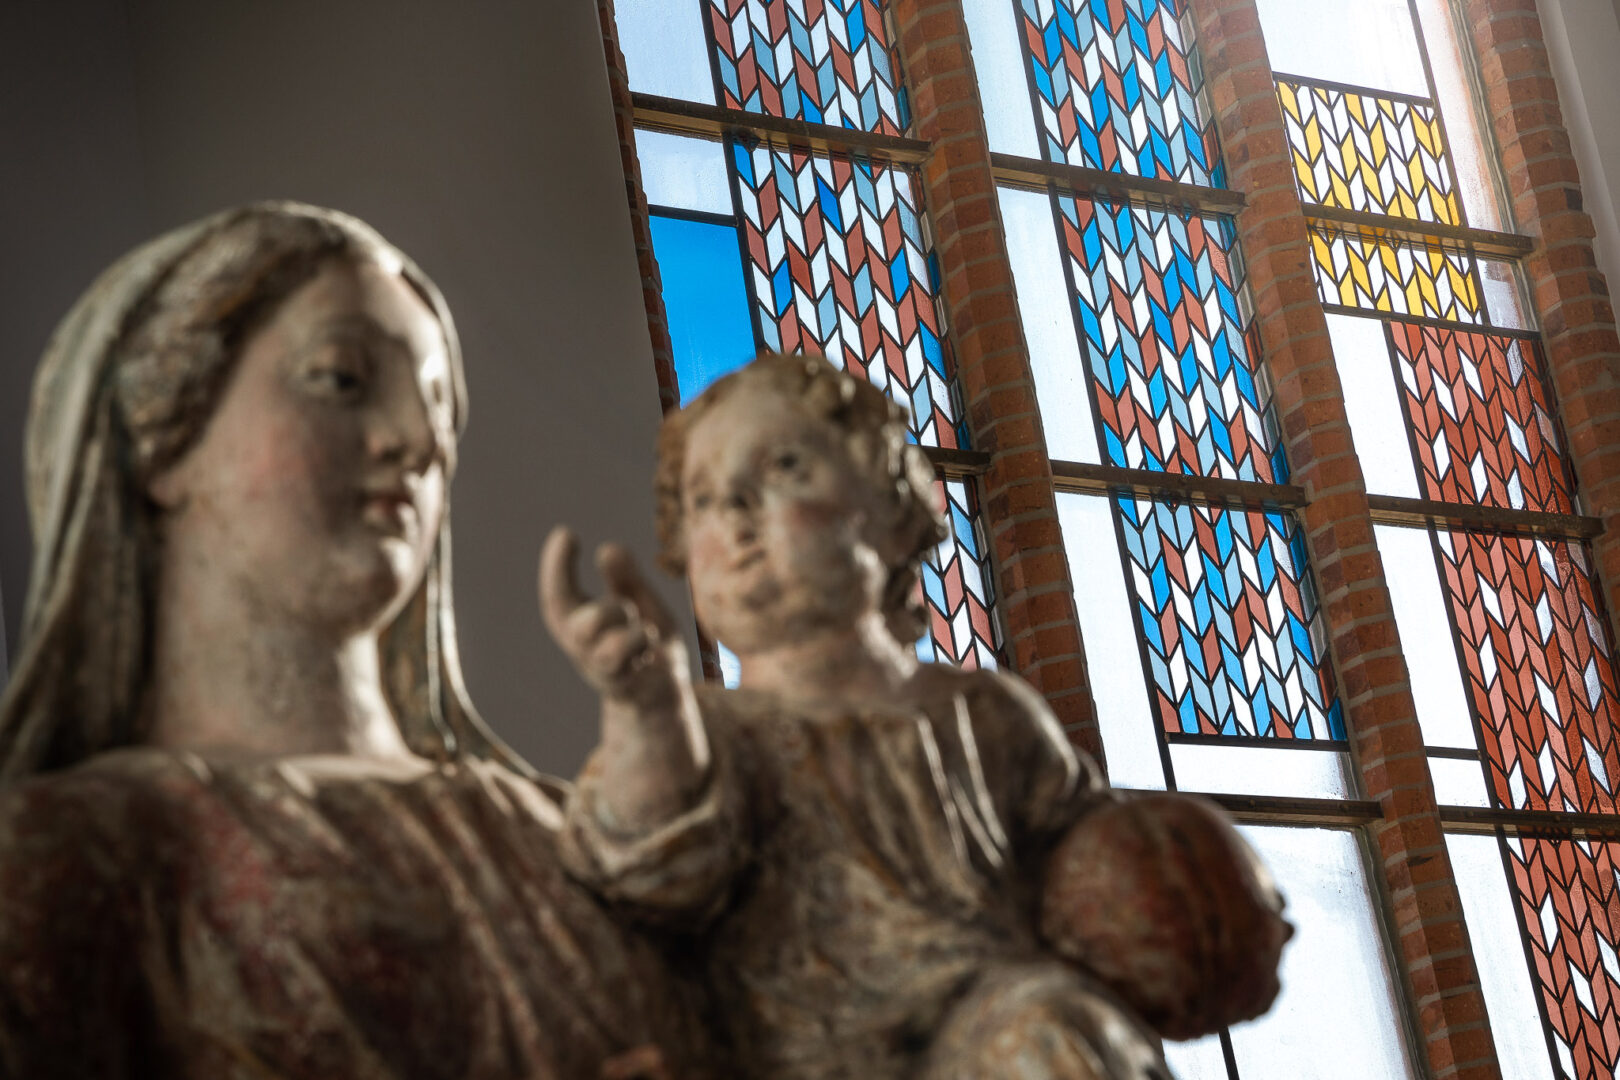 Monumentale glasramen, Sint-Nicolaaskerk, Westkapelle – ontw. Arch. Thibault Florin (Bureau Bressers) – ©Jürgen De Witte